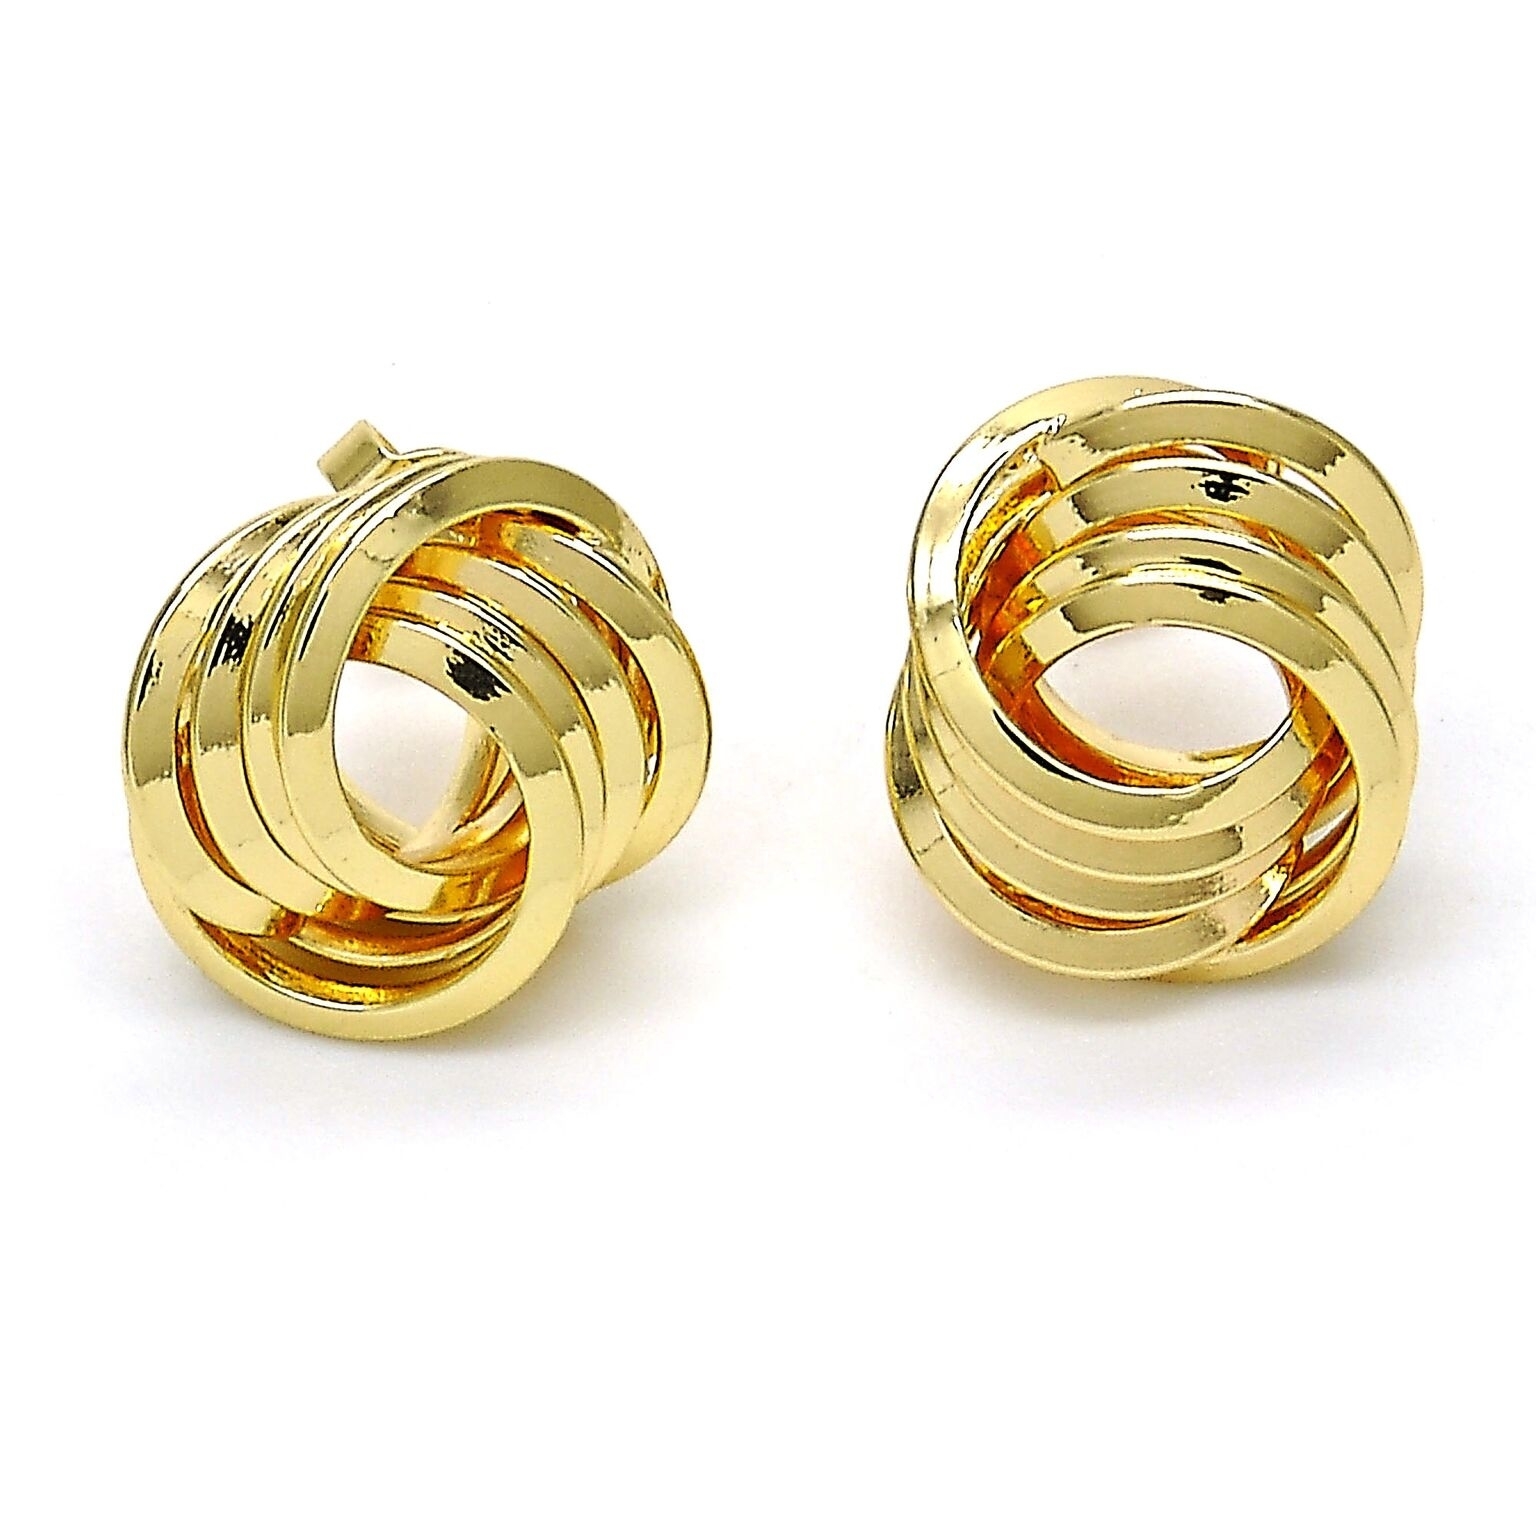 Gold Filled High Polish Finsh Stud Earring, Love Knot Design, Shinny Finish, Golden Tone